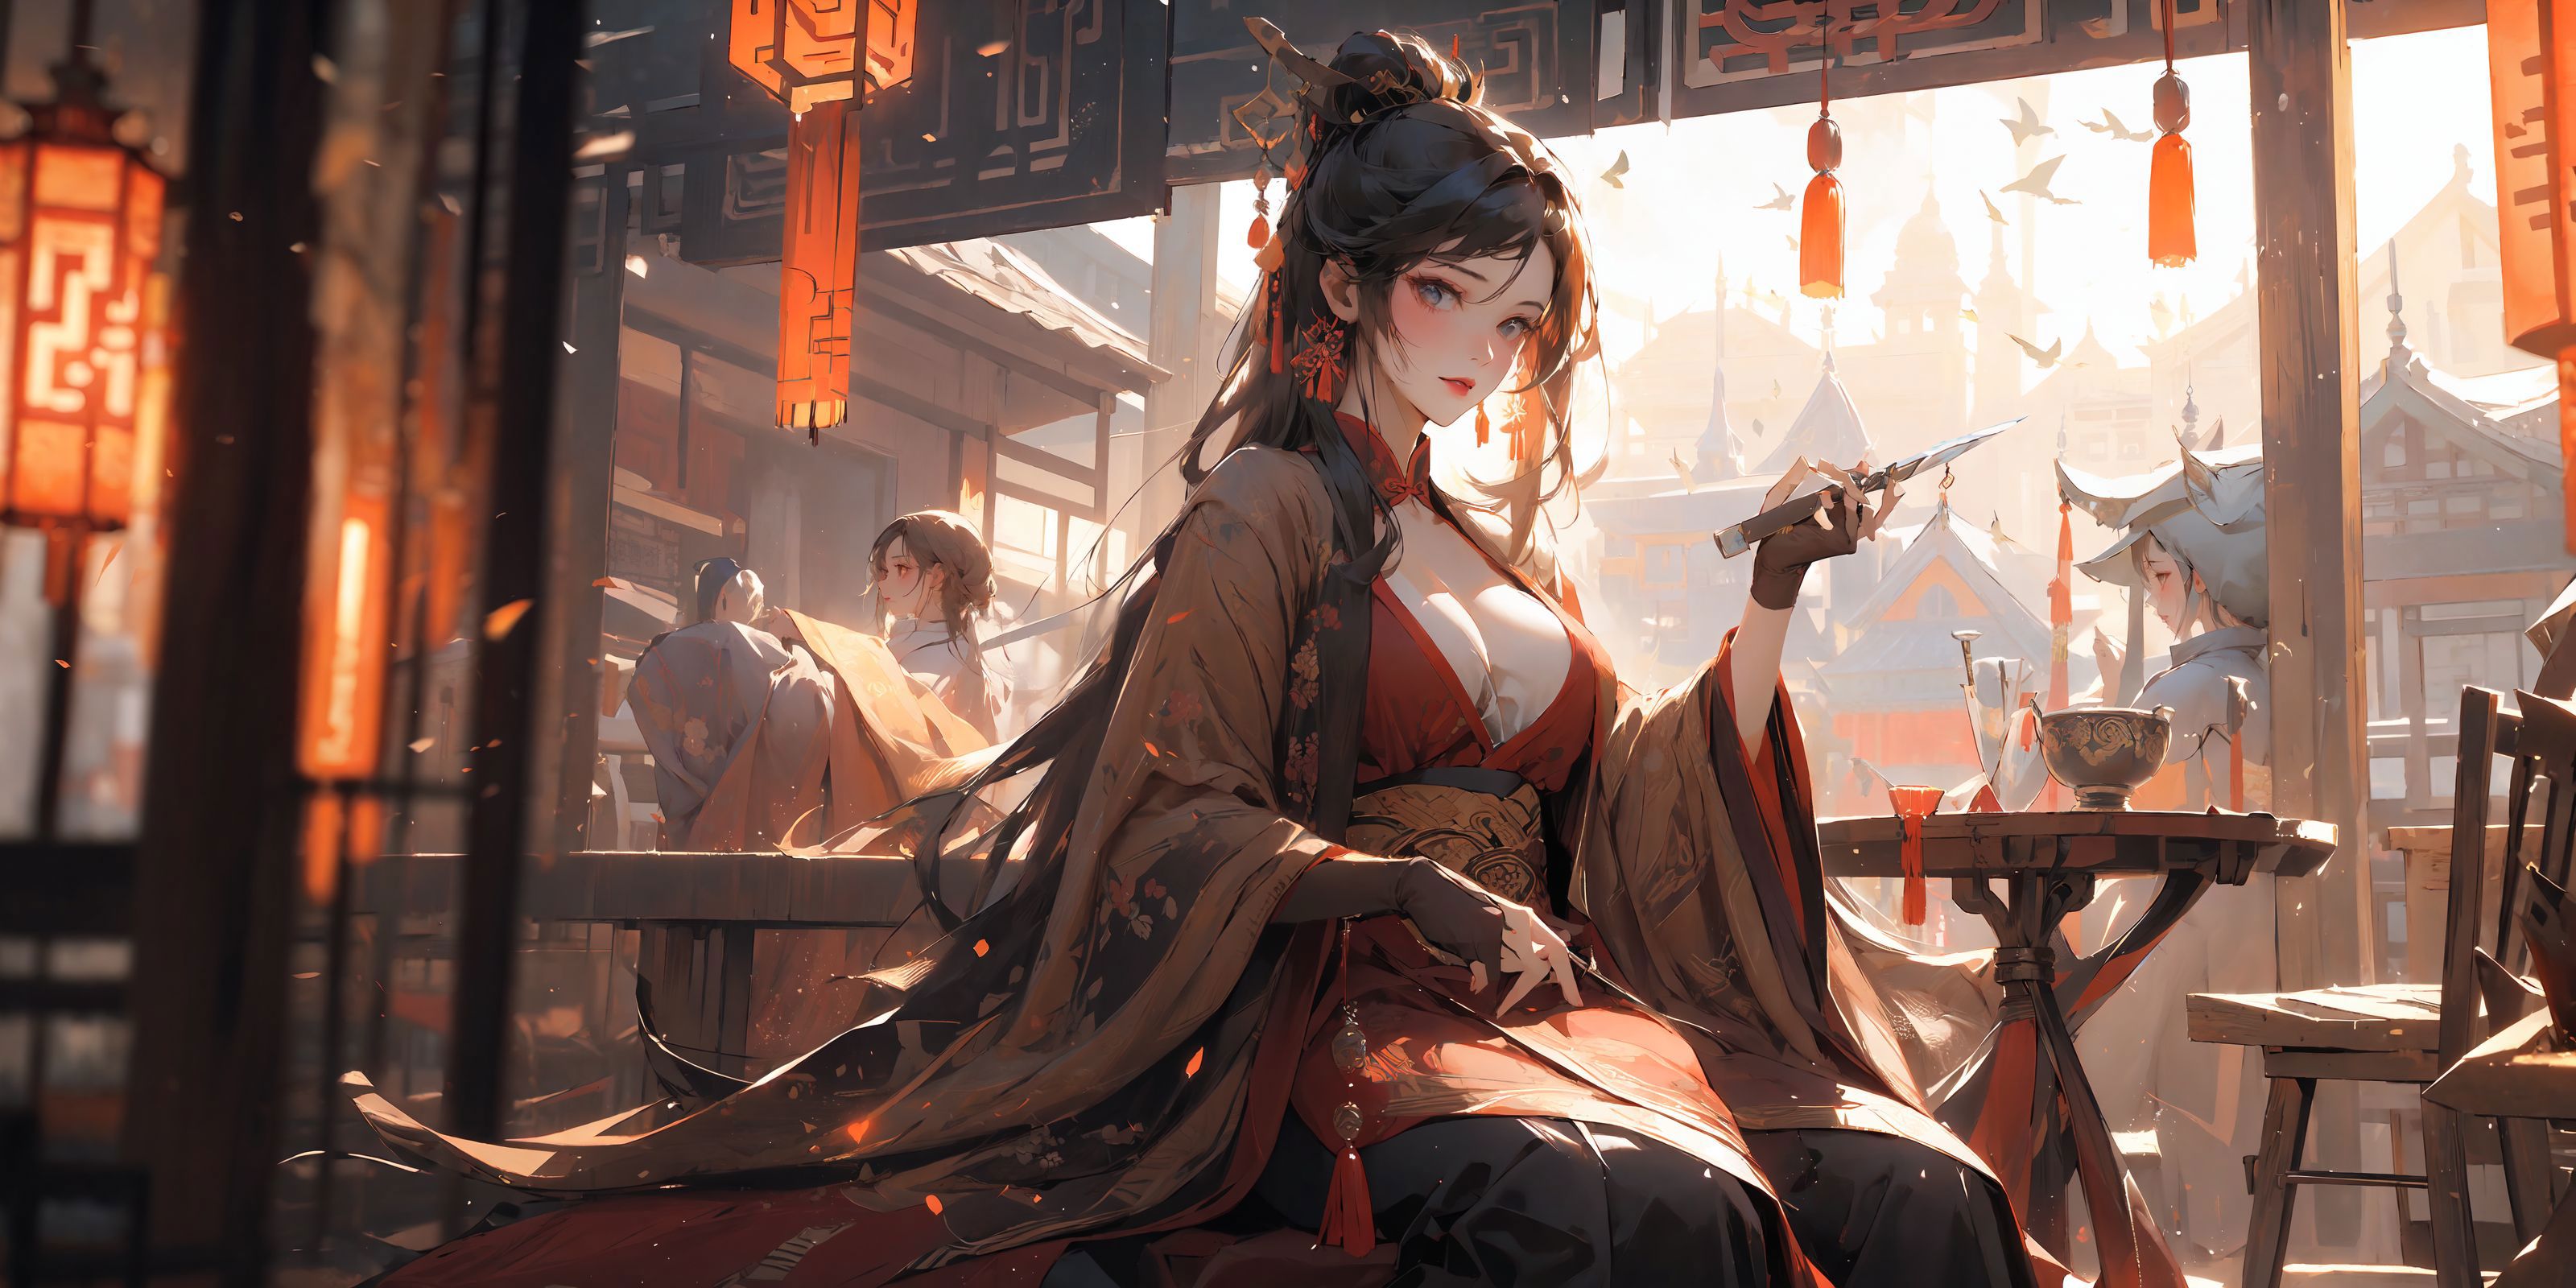 侠女/Chinese swordswoman /国风 LORA image by chosen